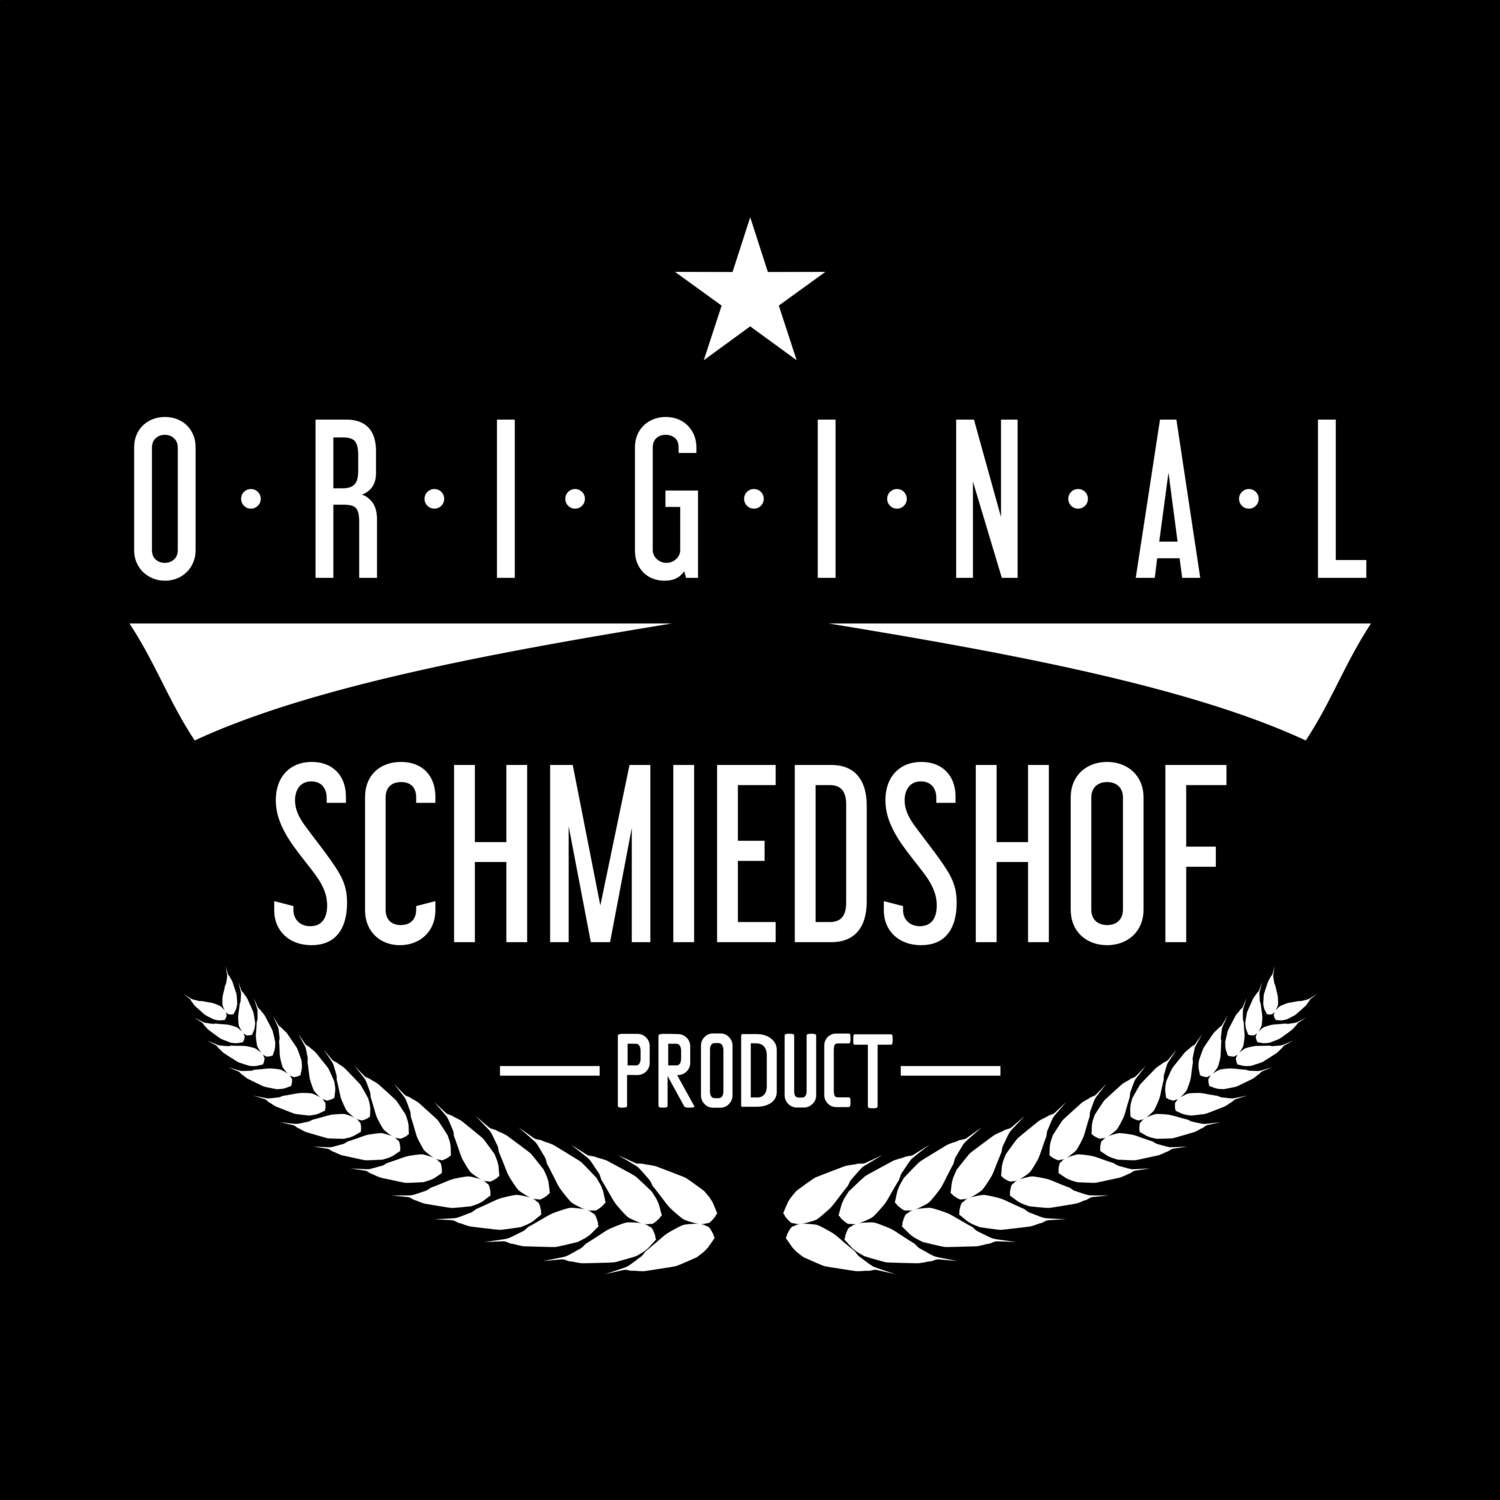 Schmiedshof T-Shirt »Original Product«